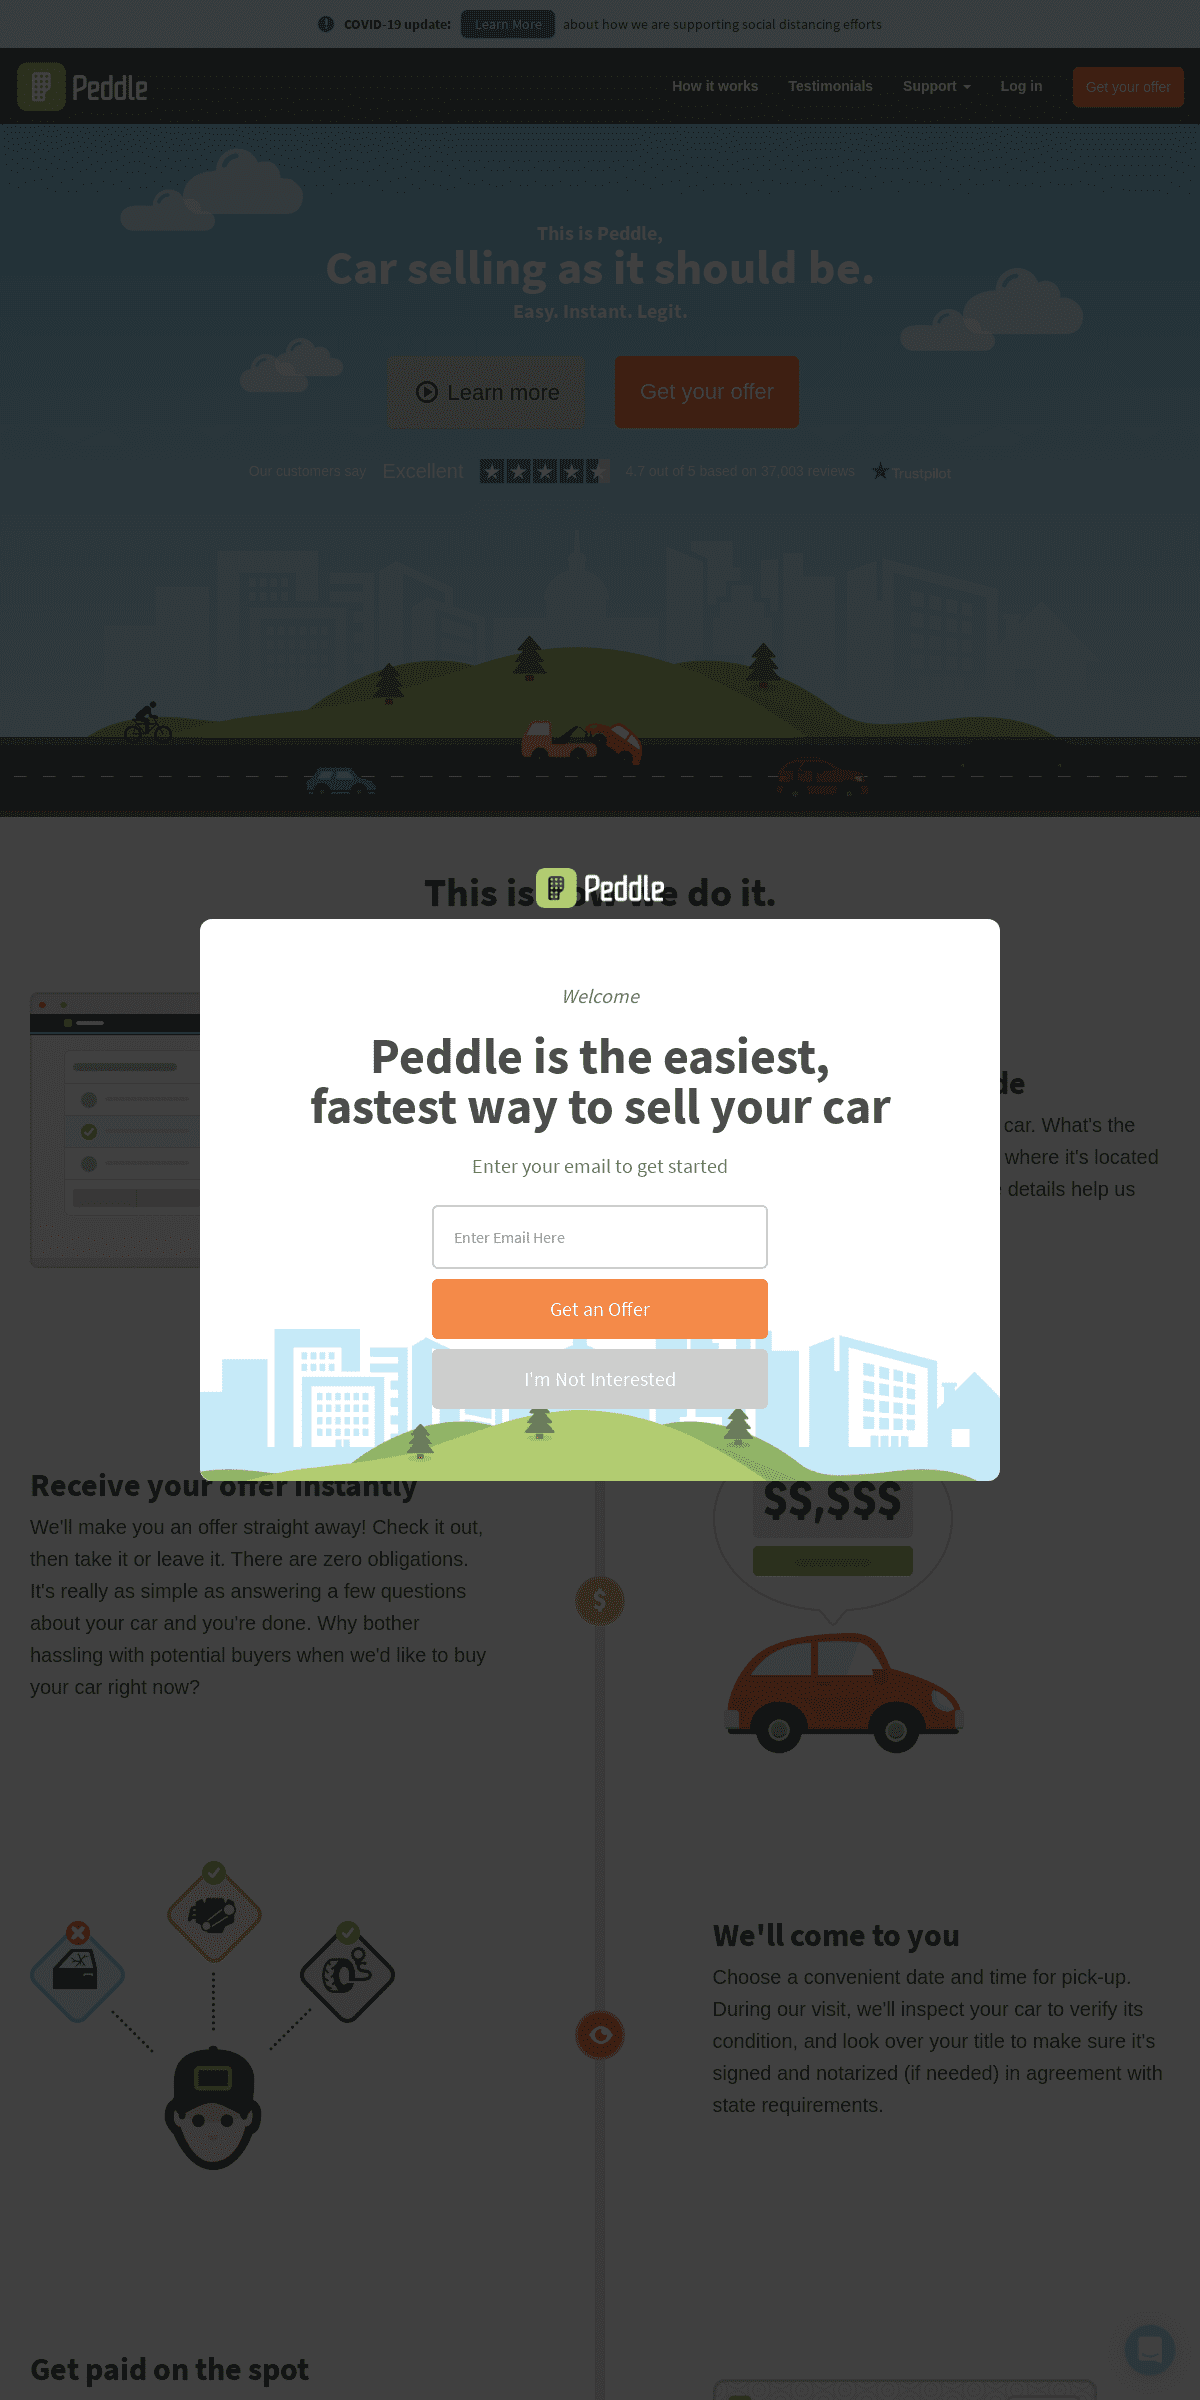 A complete backup of peddle.com